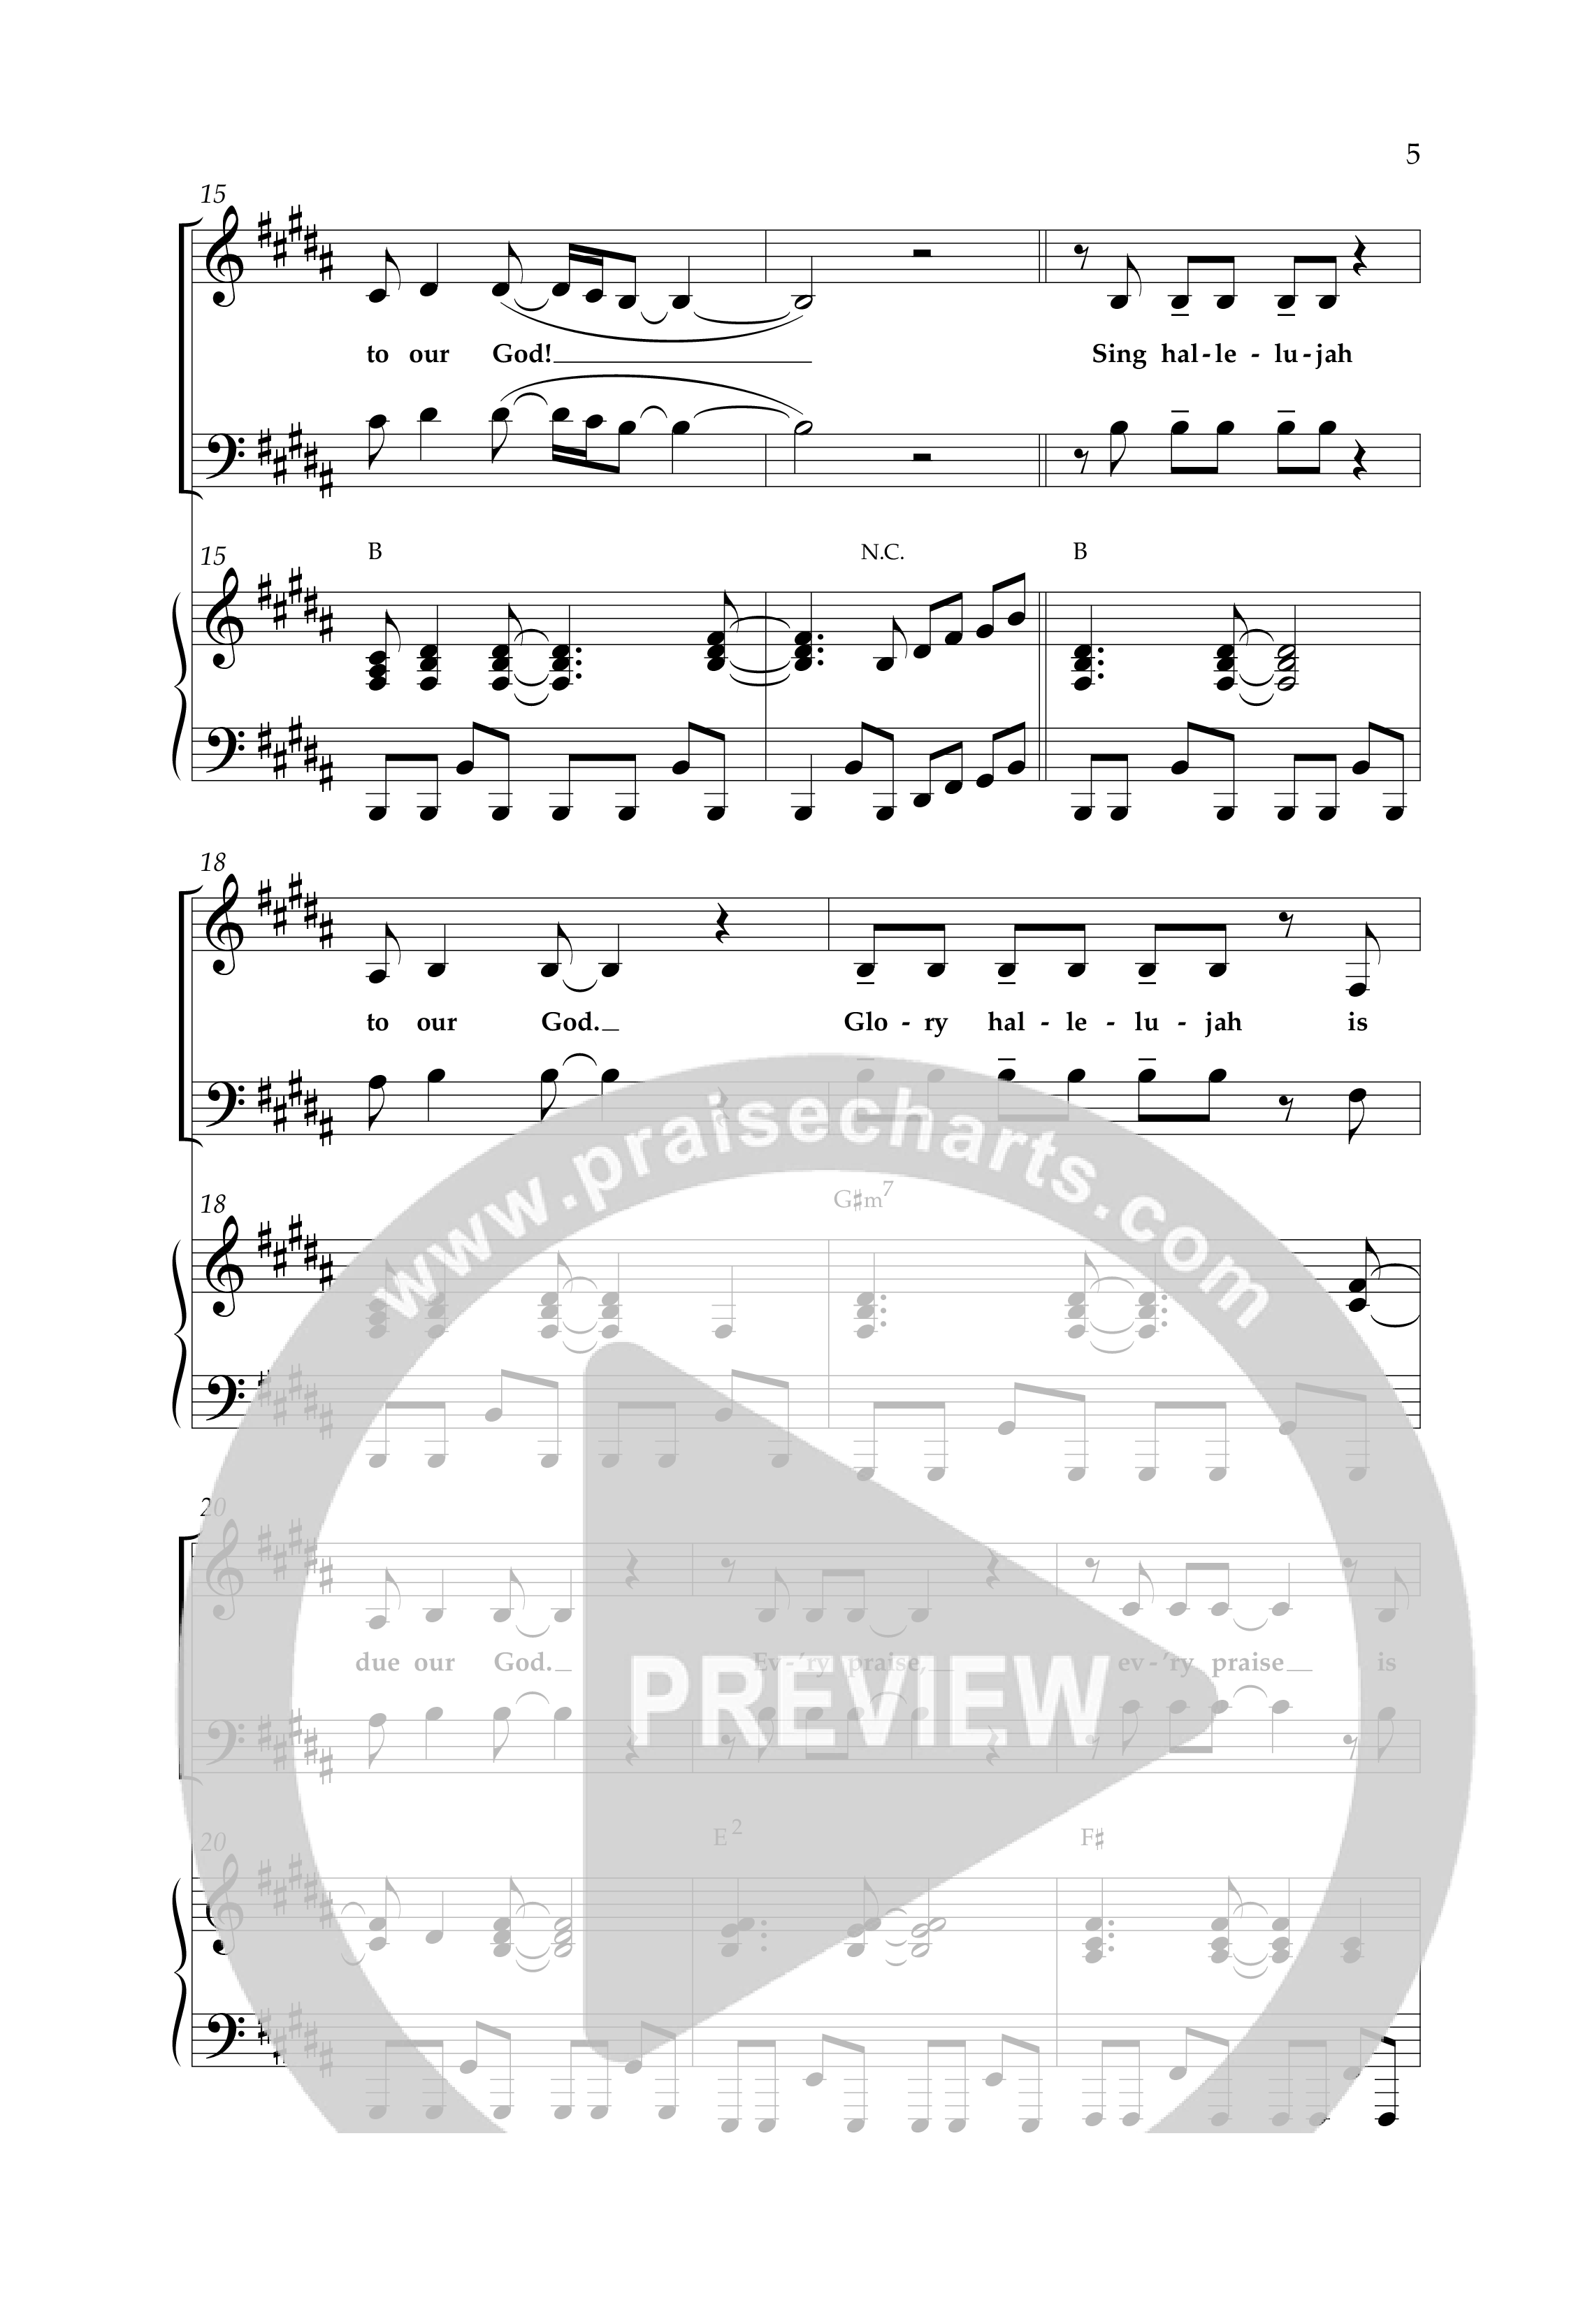 Every Praise (Choral Anthem SATB) Anthem (SATB/Piano) (Lifeway Choral / Arr. Cliff Duren)